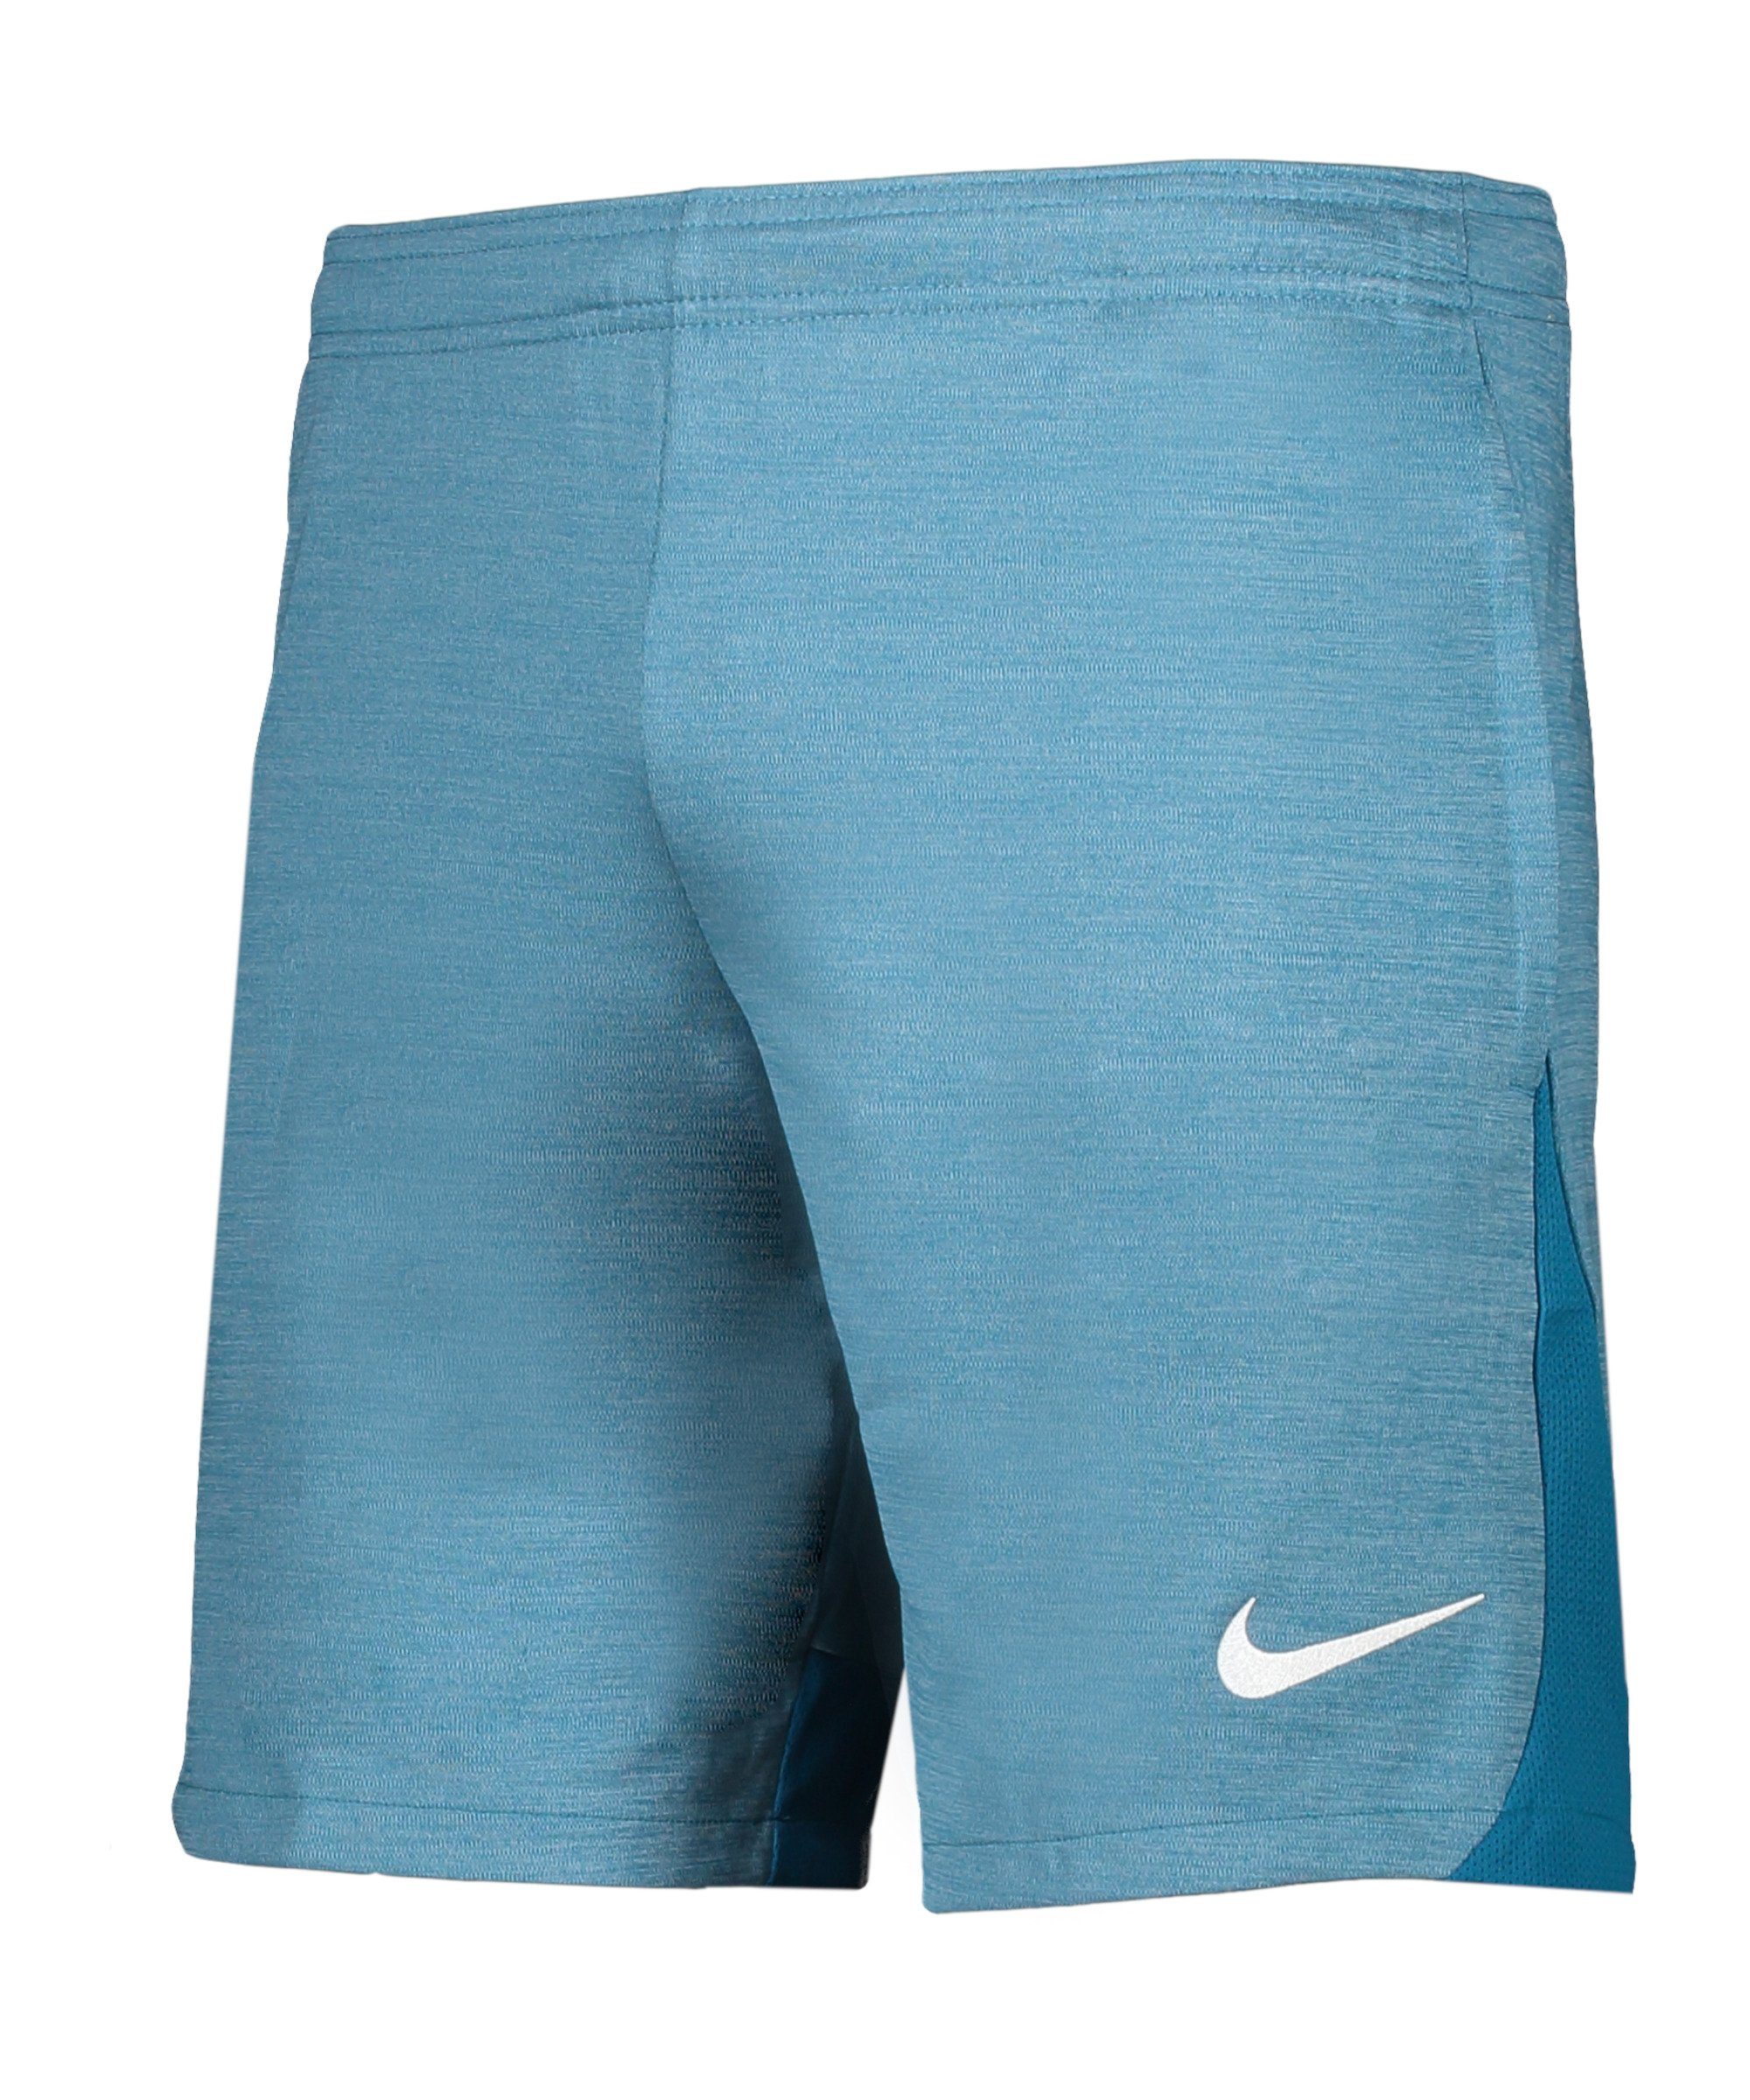 blaublaublauweiss Nike Heathered Sporthose Short